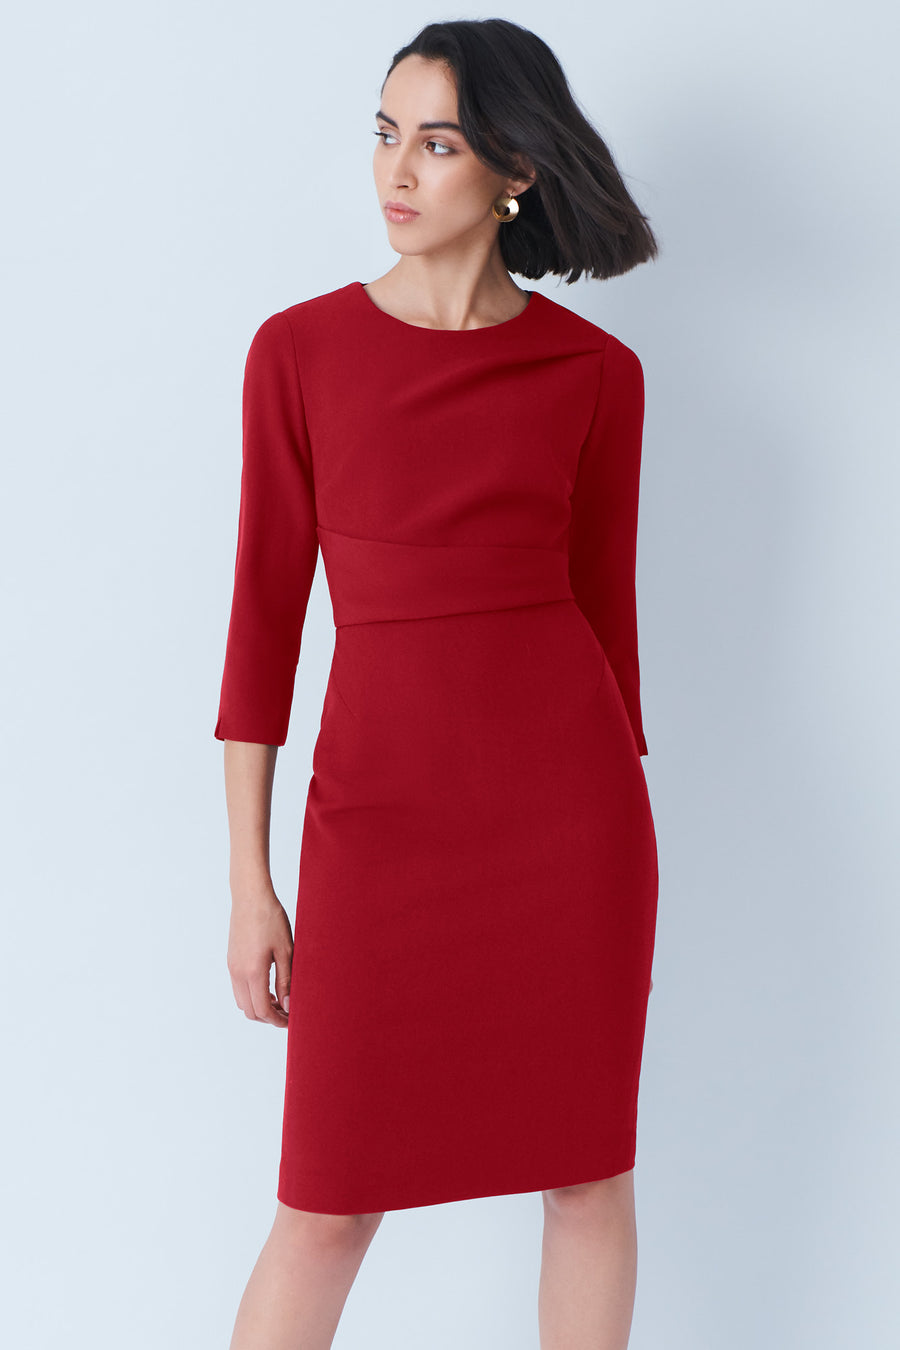 Kensington Red Dress